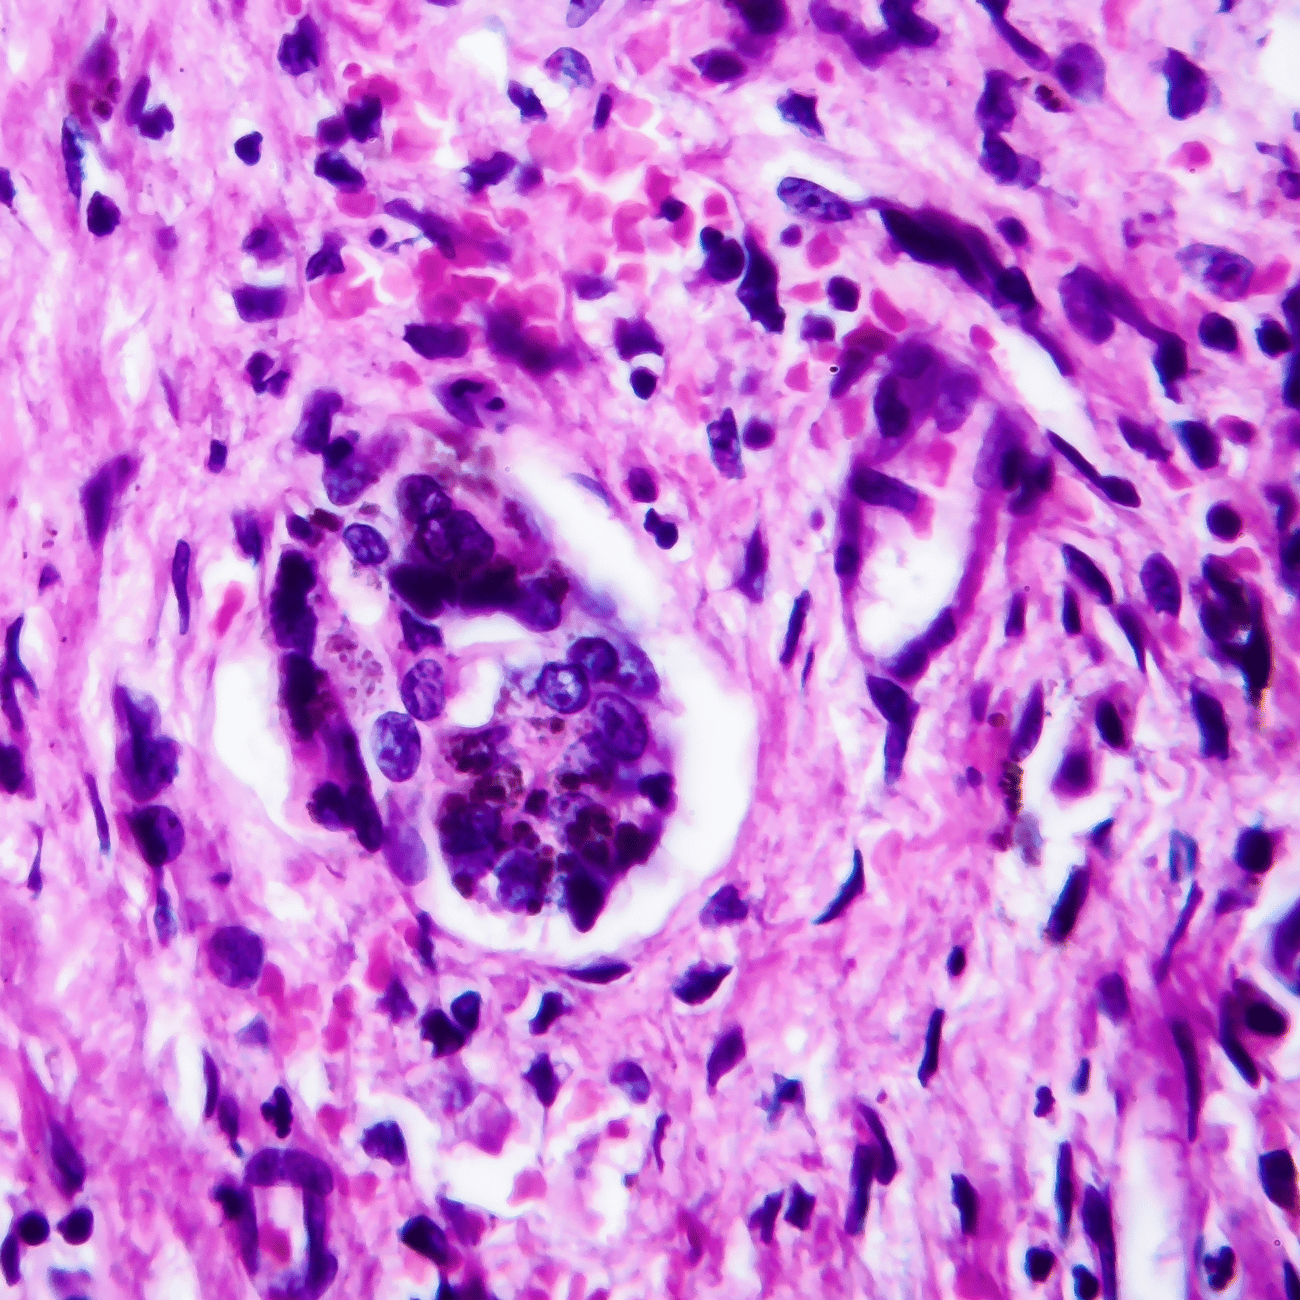 Melanoma under a microscope